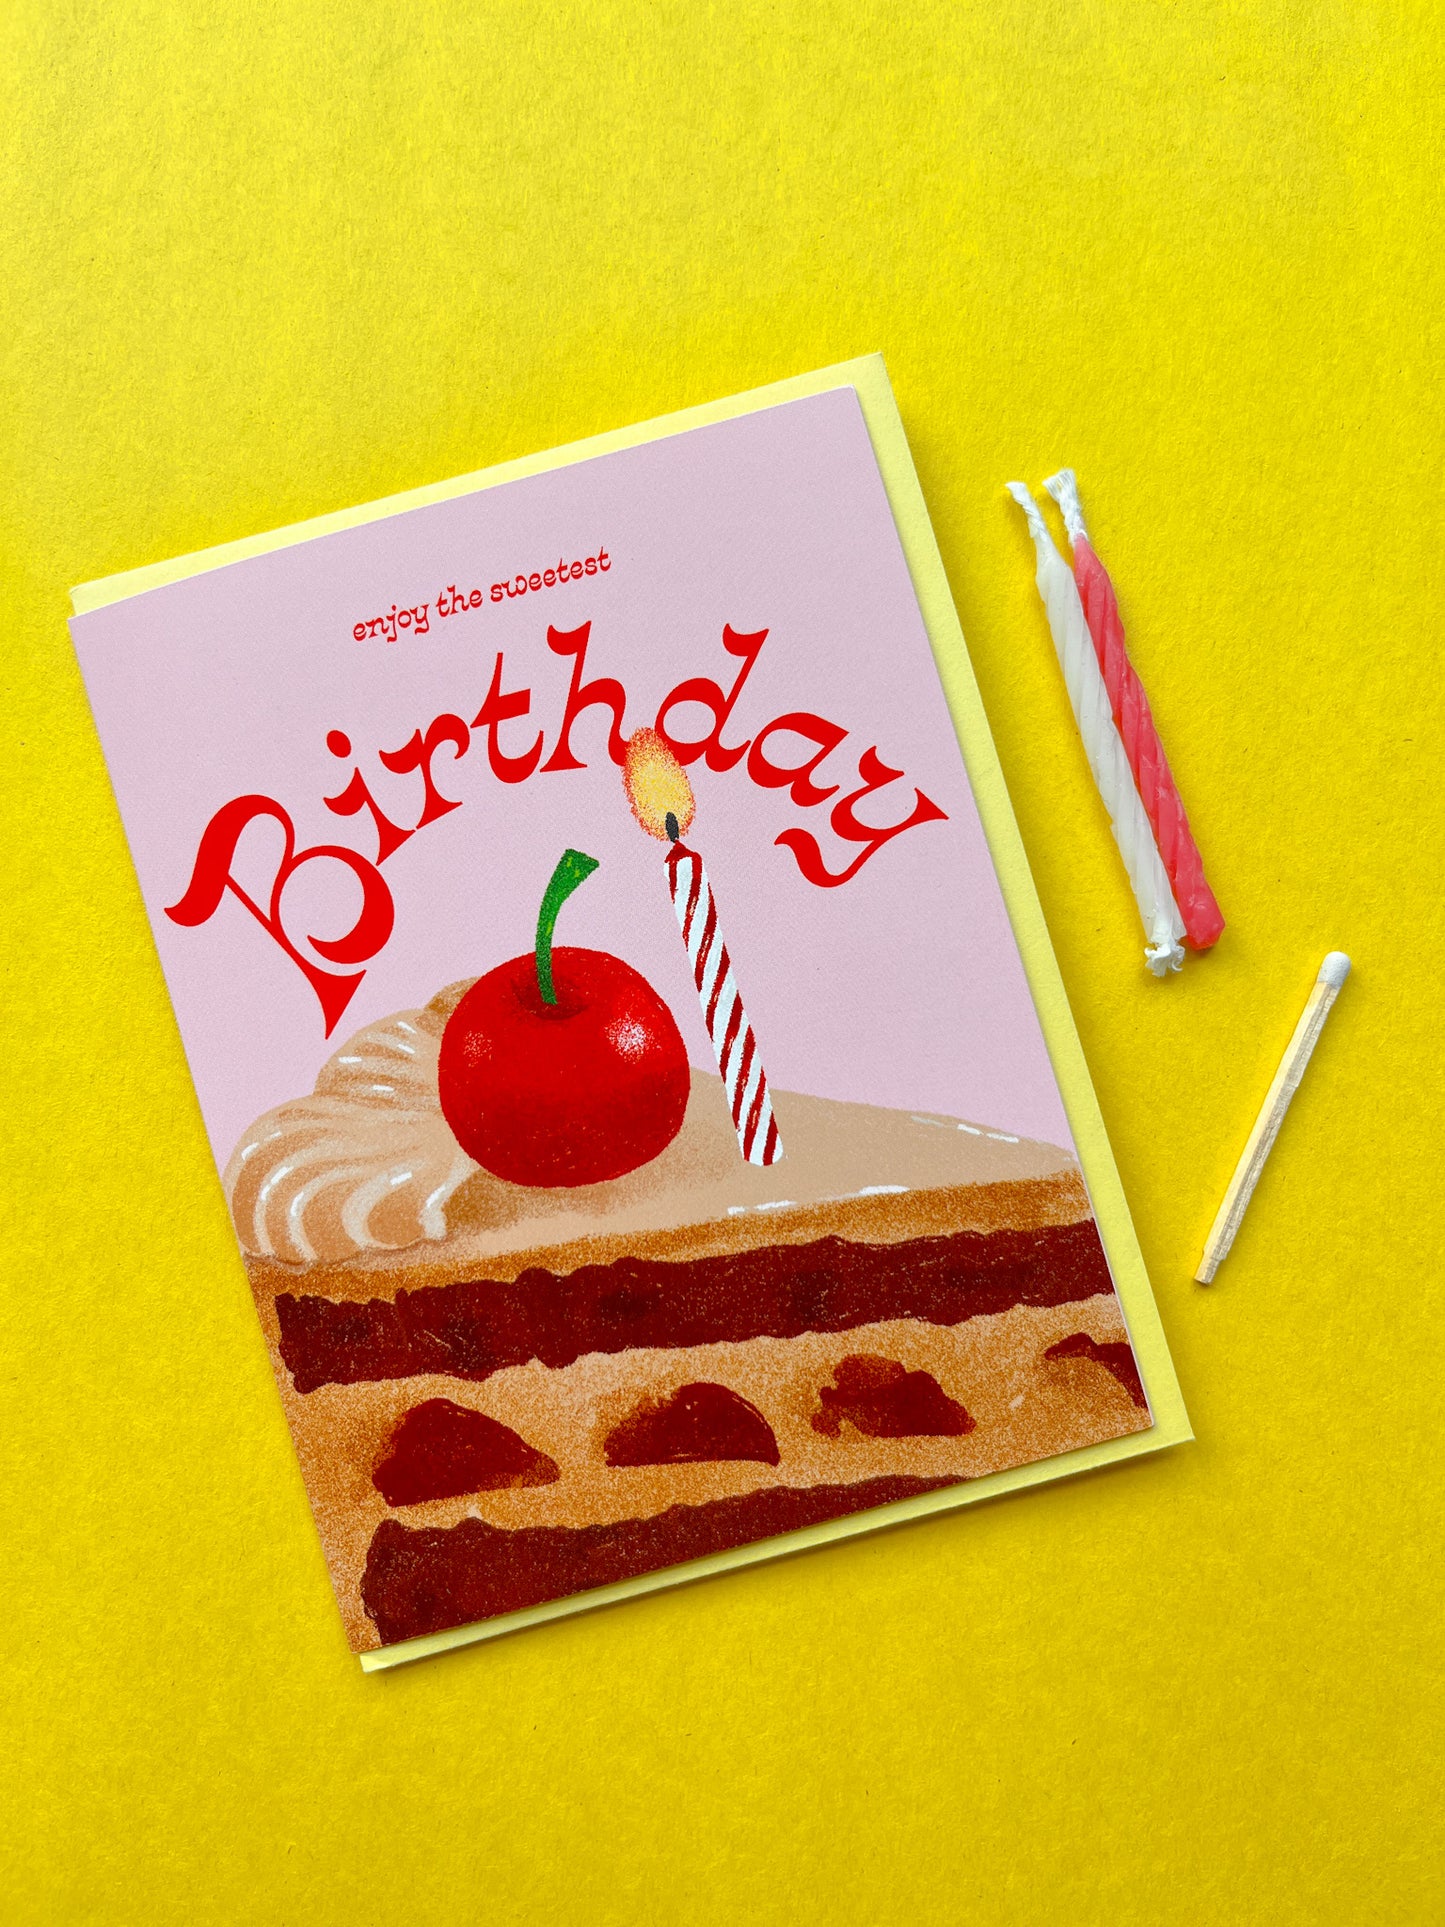 Enjoy the Sweetest Birthday - Happy Birthday Card